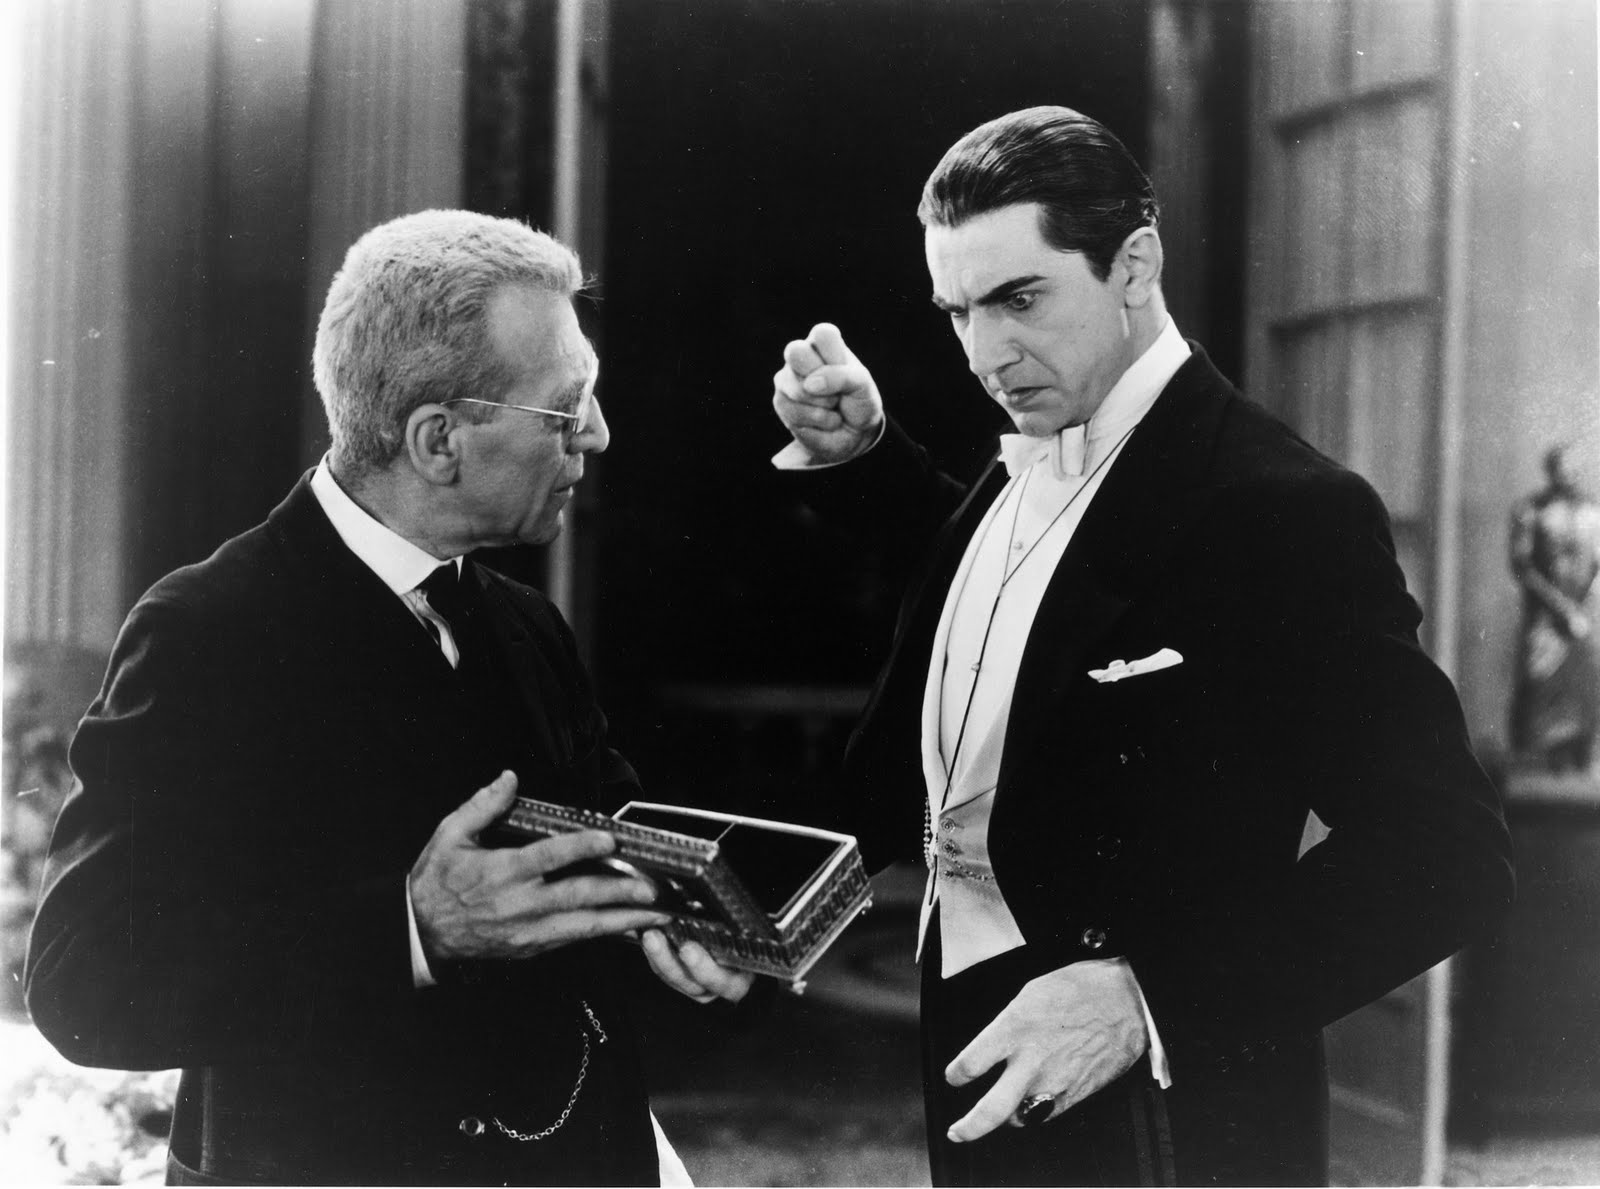 Van Helsing (Edward Van Sloan) and Count Dracula (Bela Lugosi) in Dracula (1931)